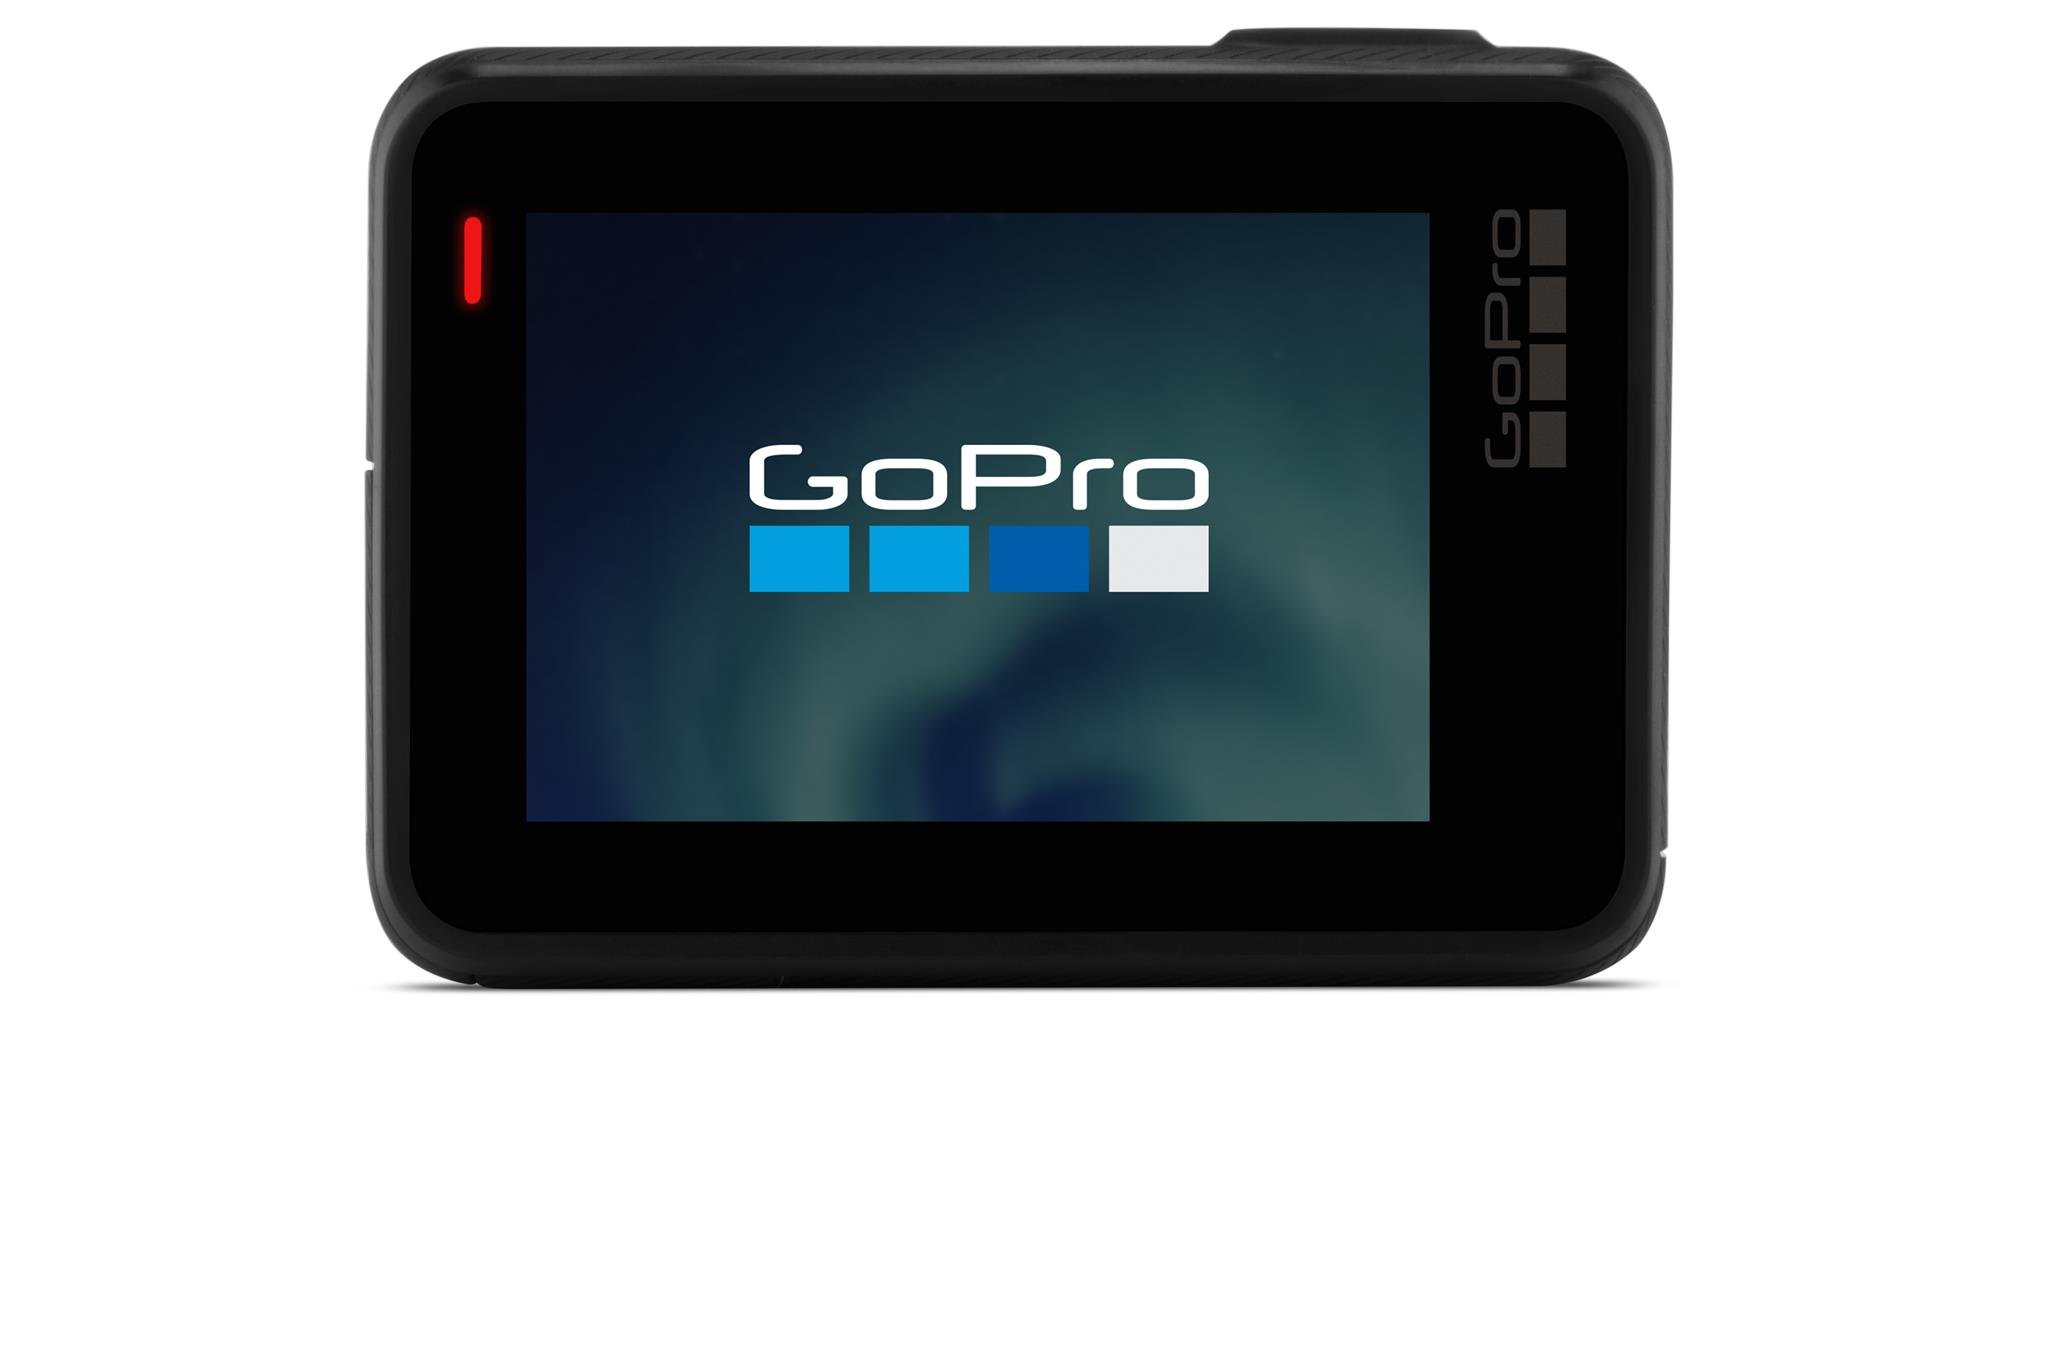 Buy the GoPro HERO online at Outdoorphoto